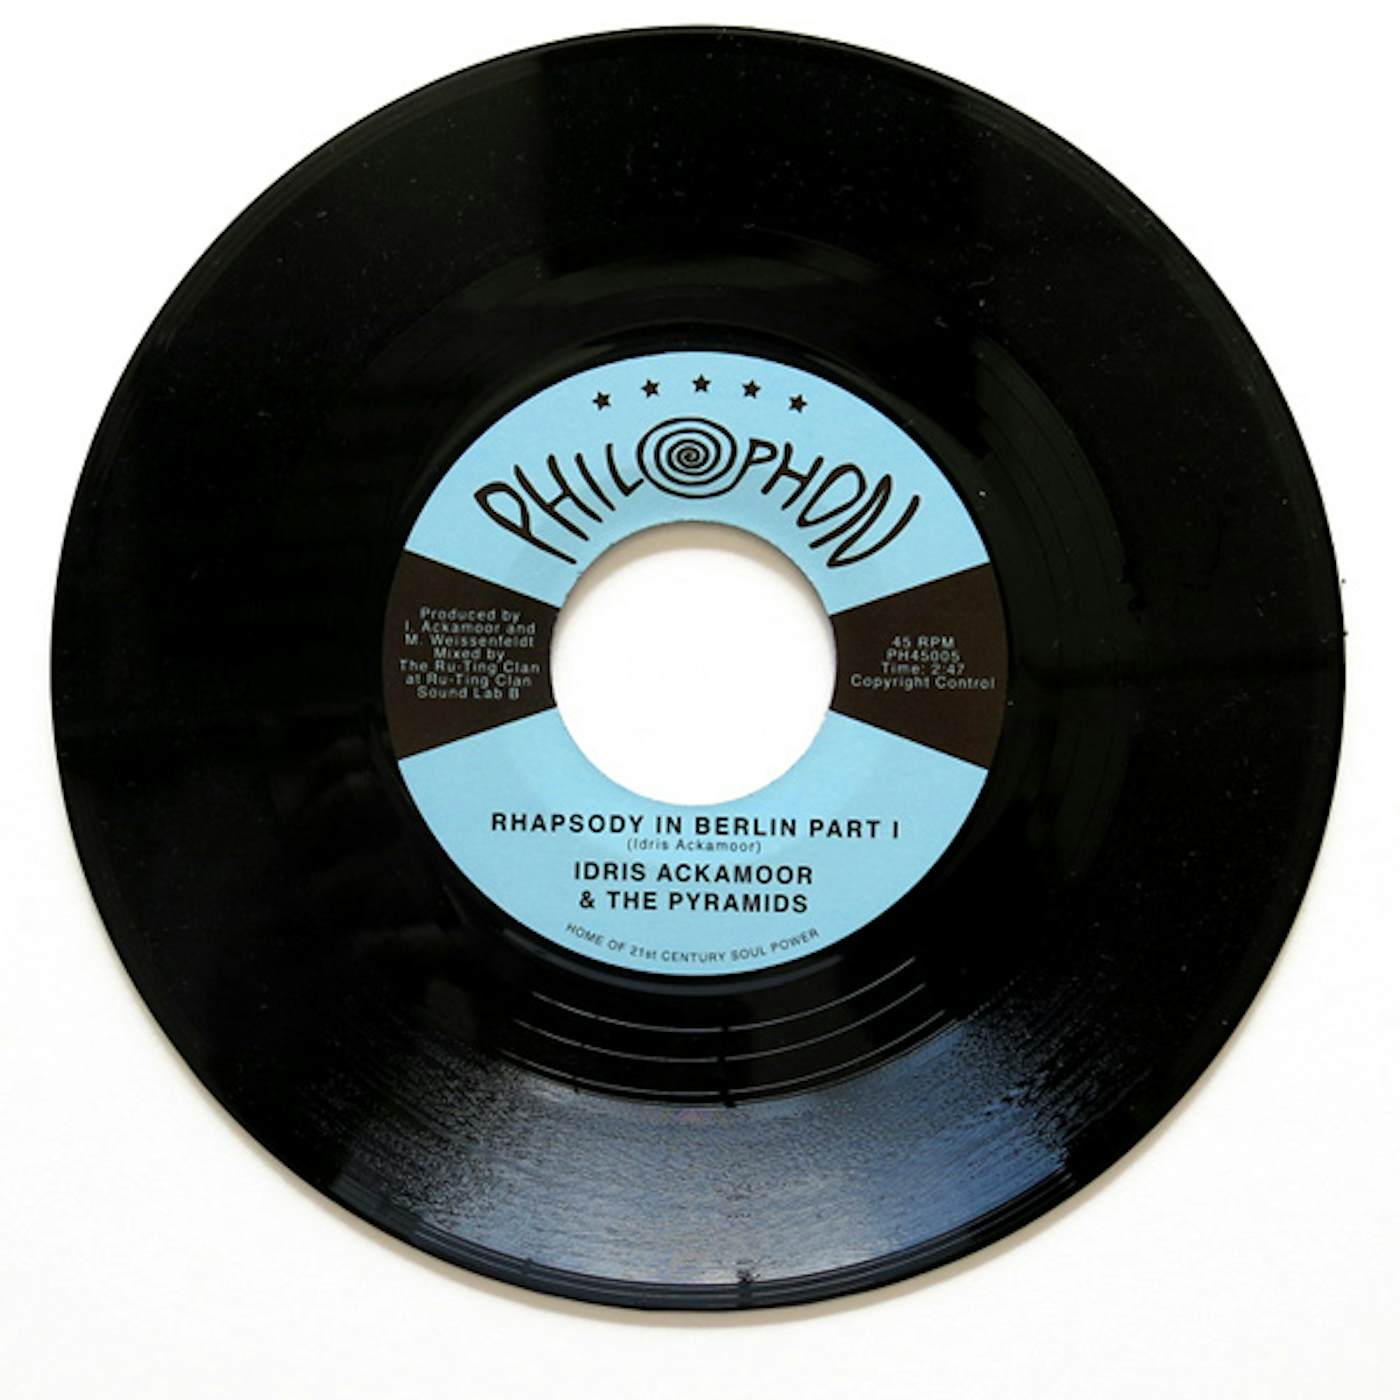 Idris Ackamoor & The Pyramids RHAPSODY IN BERLIN PART 1 / PART 2 Vinyl Record